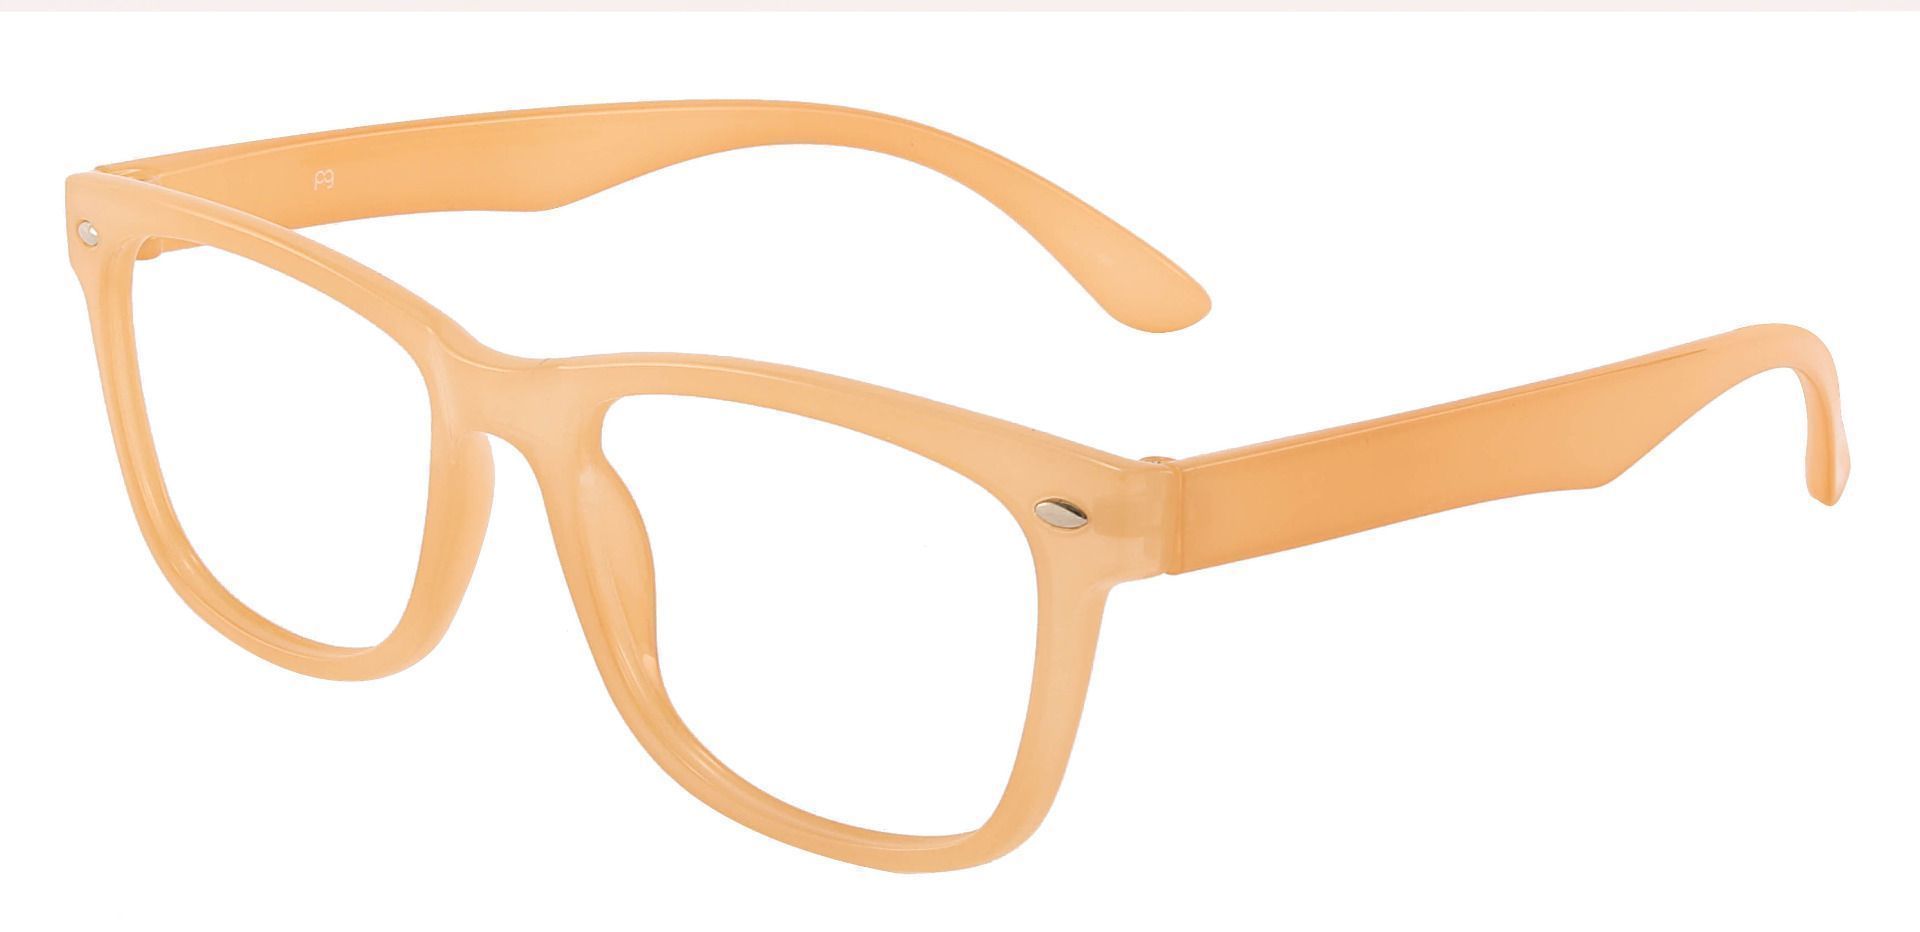 Oscar Rectangle Eyeglasses Frame - Brown